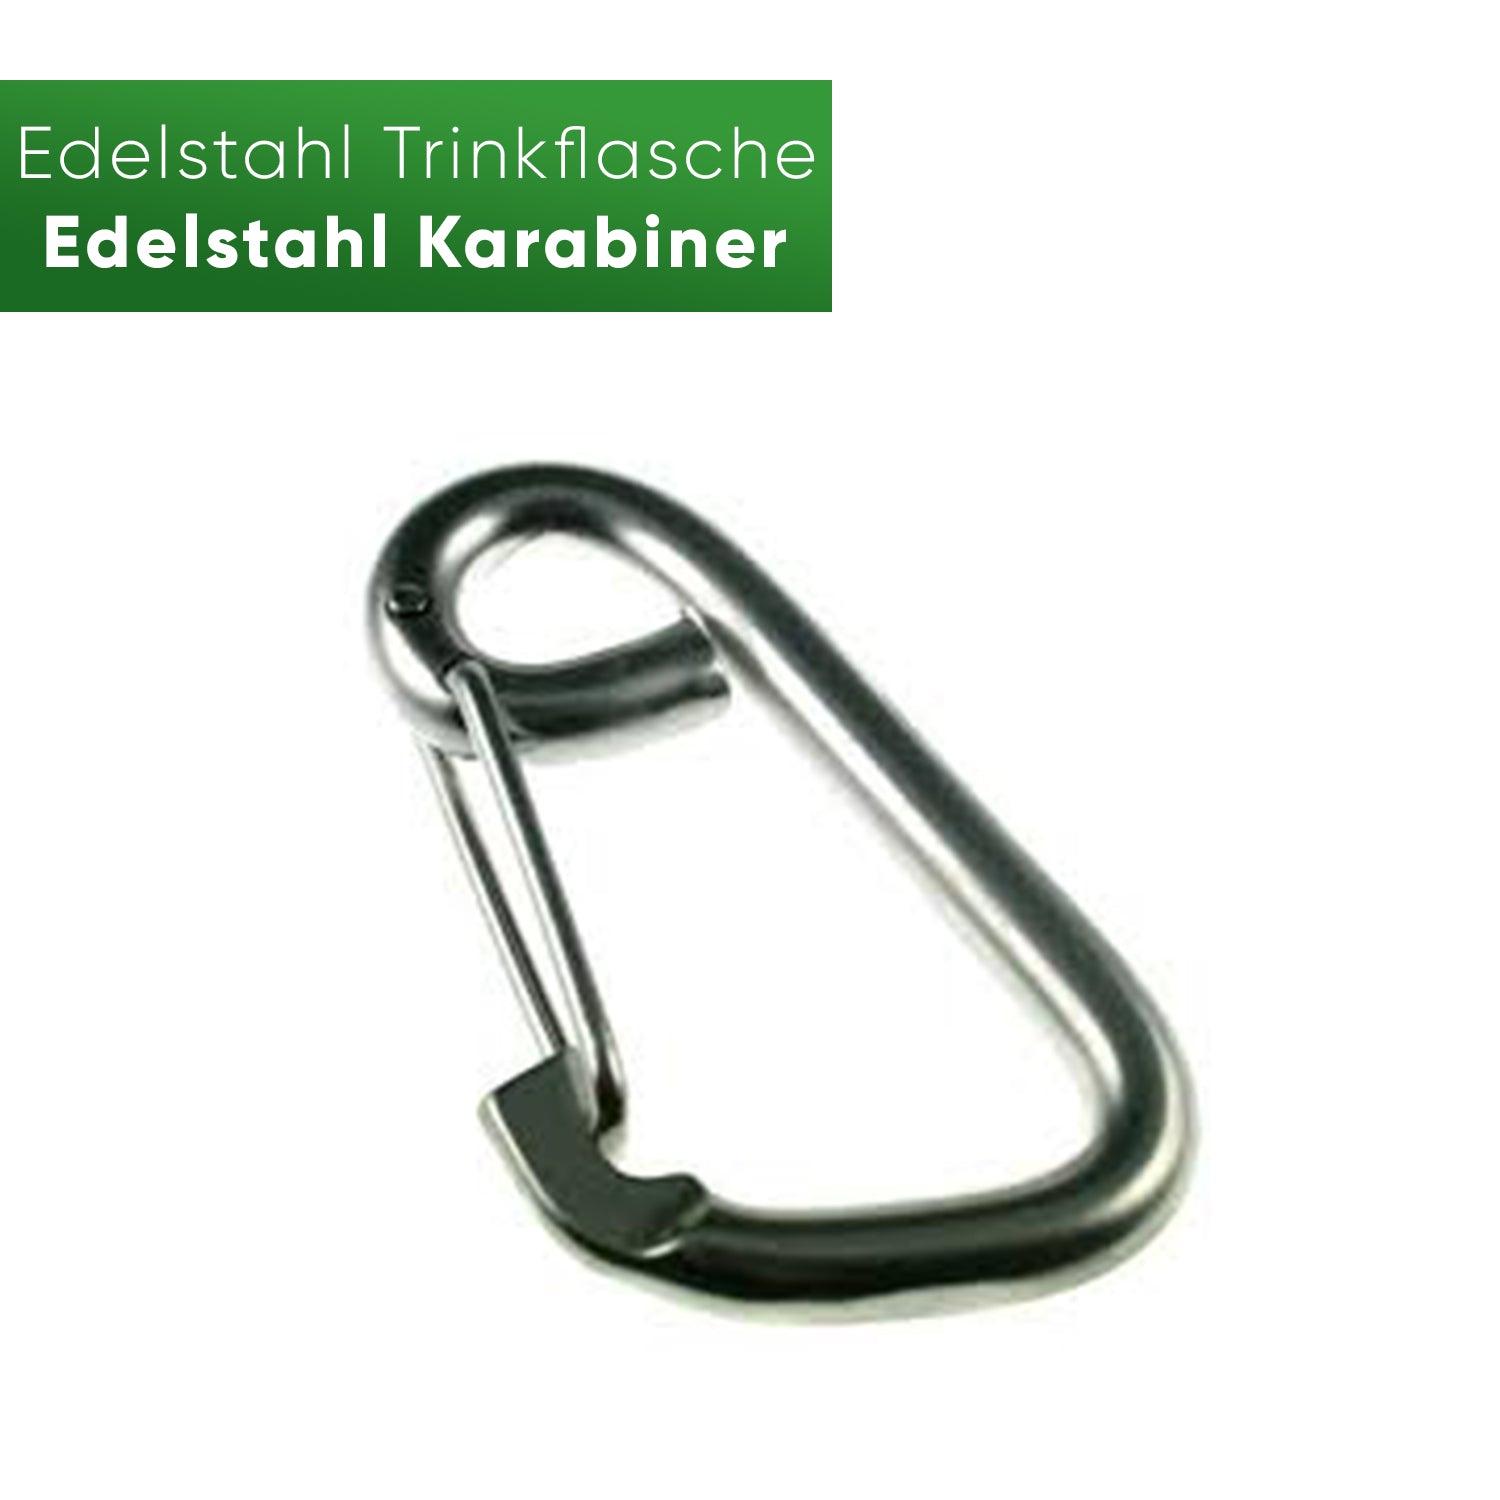 Edelstahl Trinkflasche - Karabiner